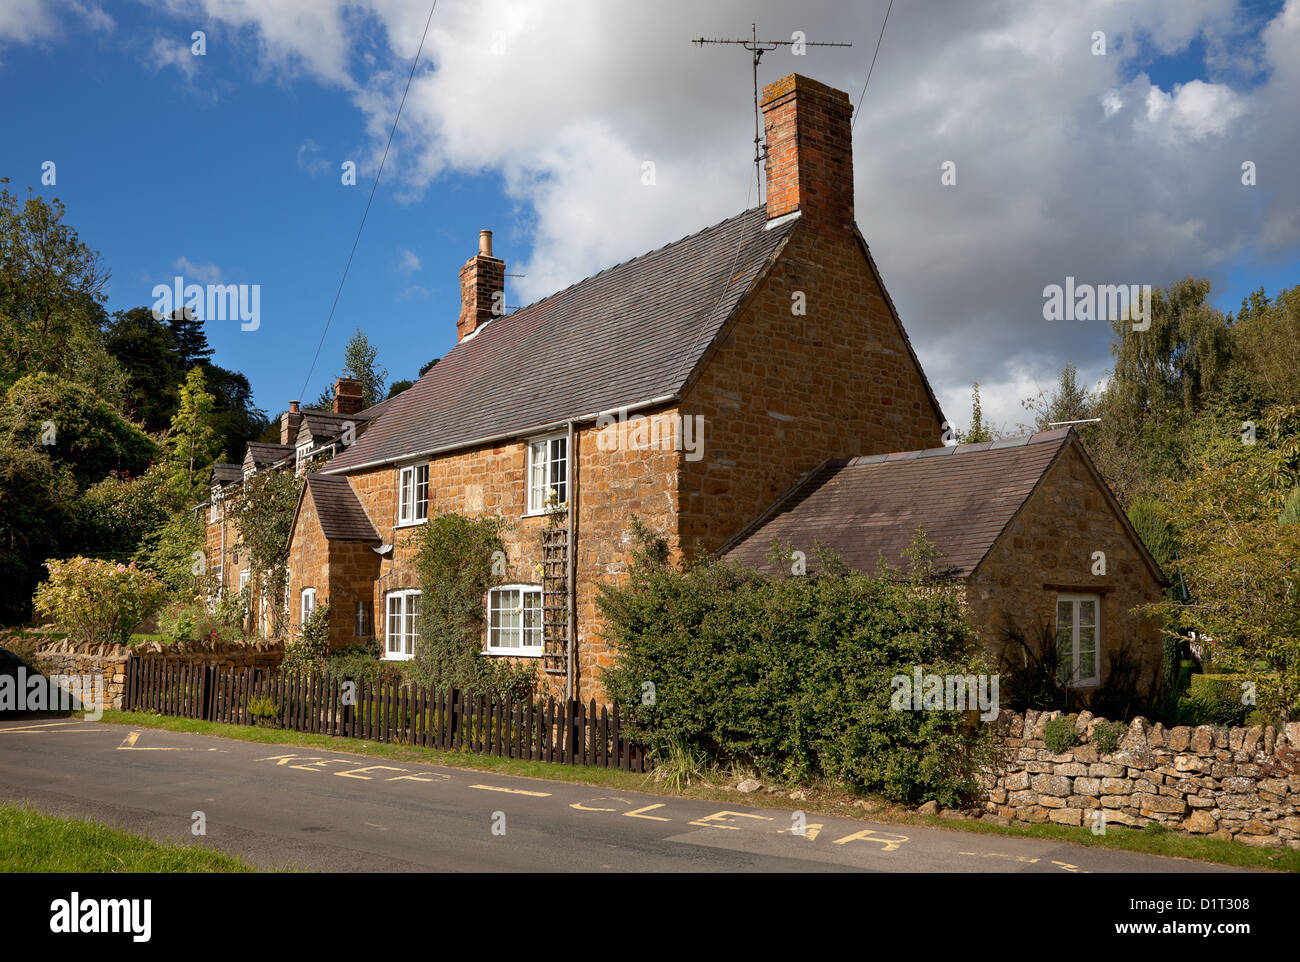 Jolie maison en pierre, Warwickshire, Angleterre Banque D'Images